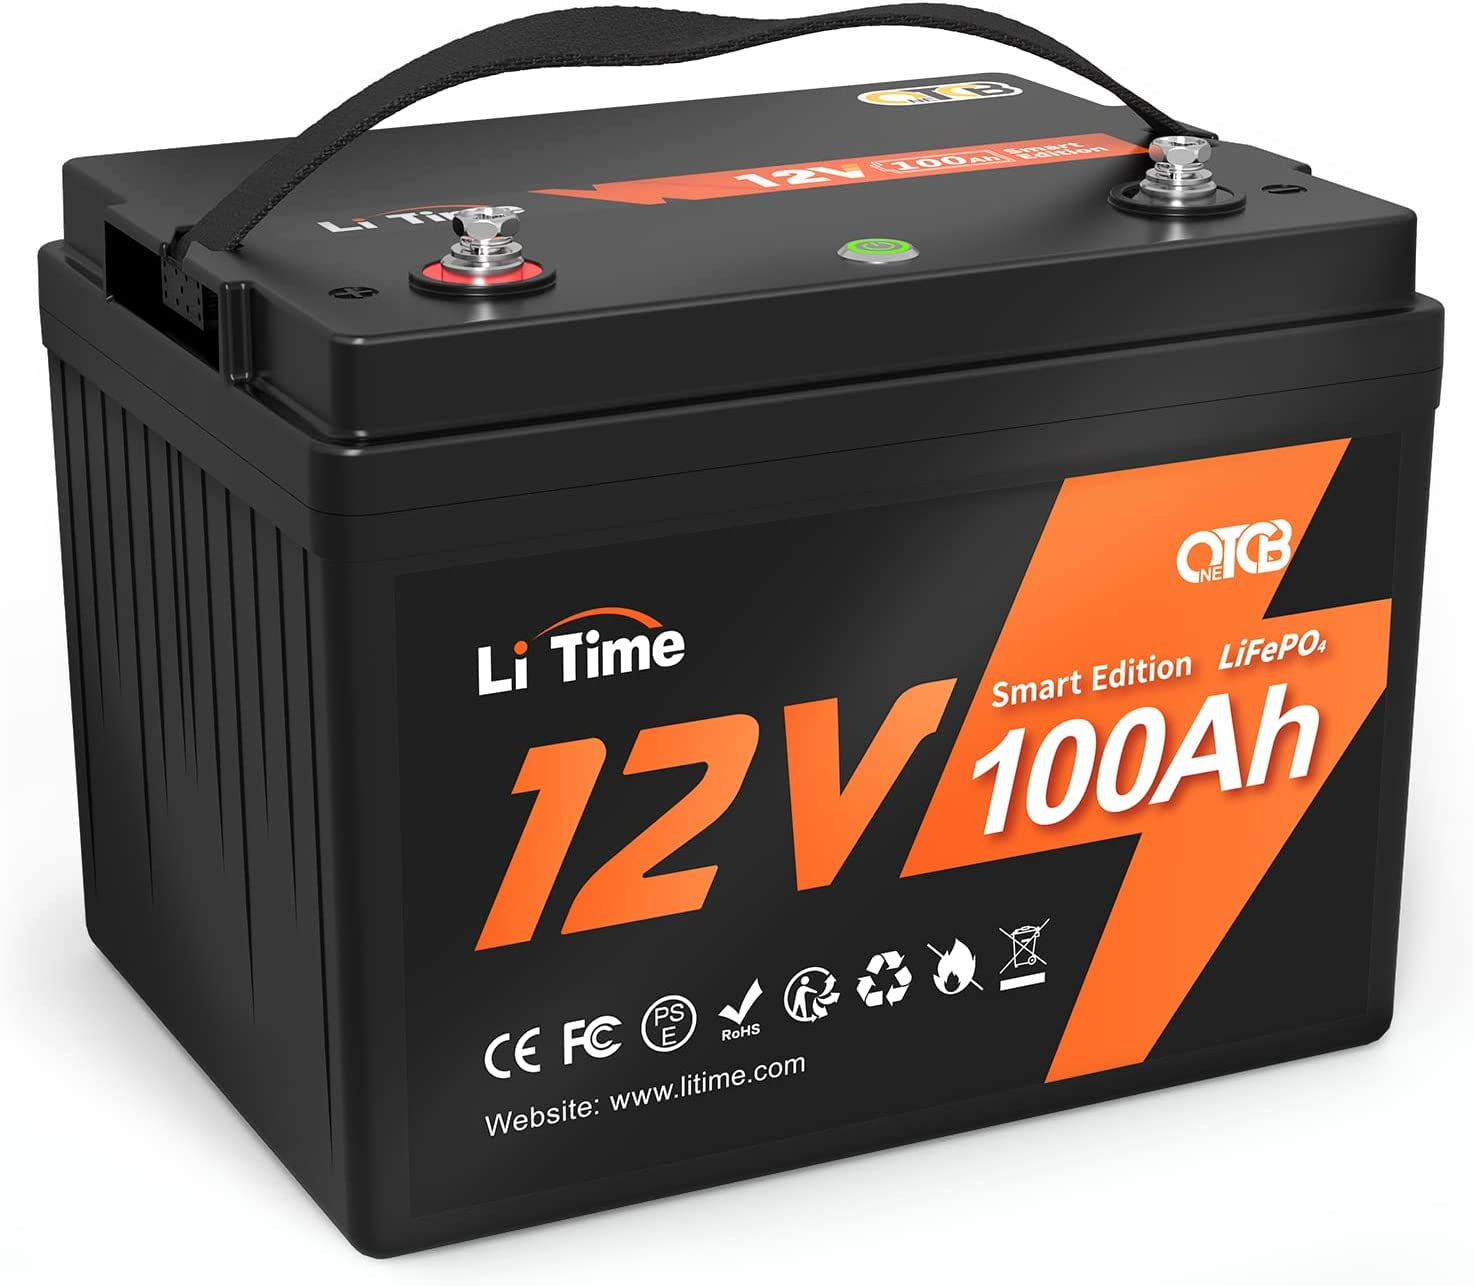 Timeusb LiFePO4 Akku 12V 140Ah Lithium Batterie mit Low-Temp Cut-Off